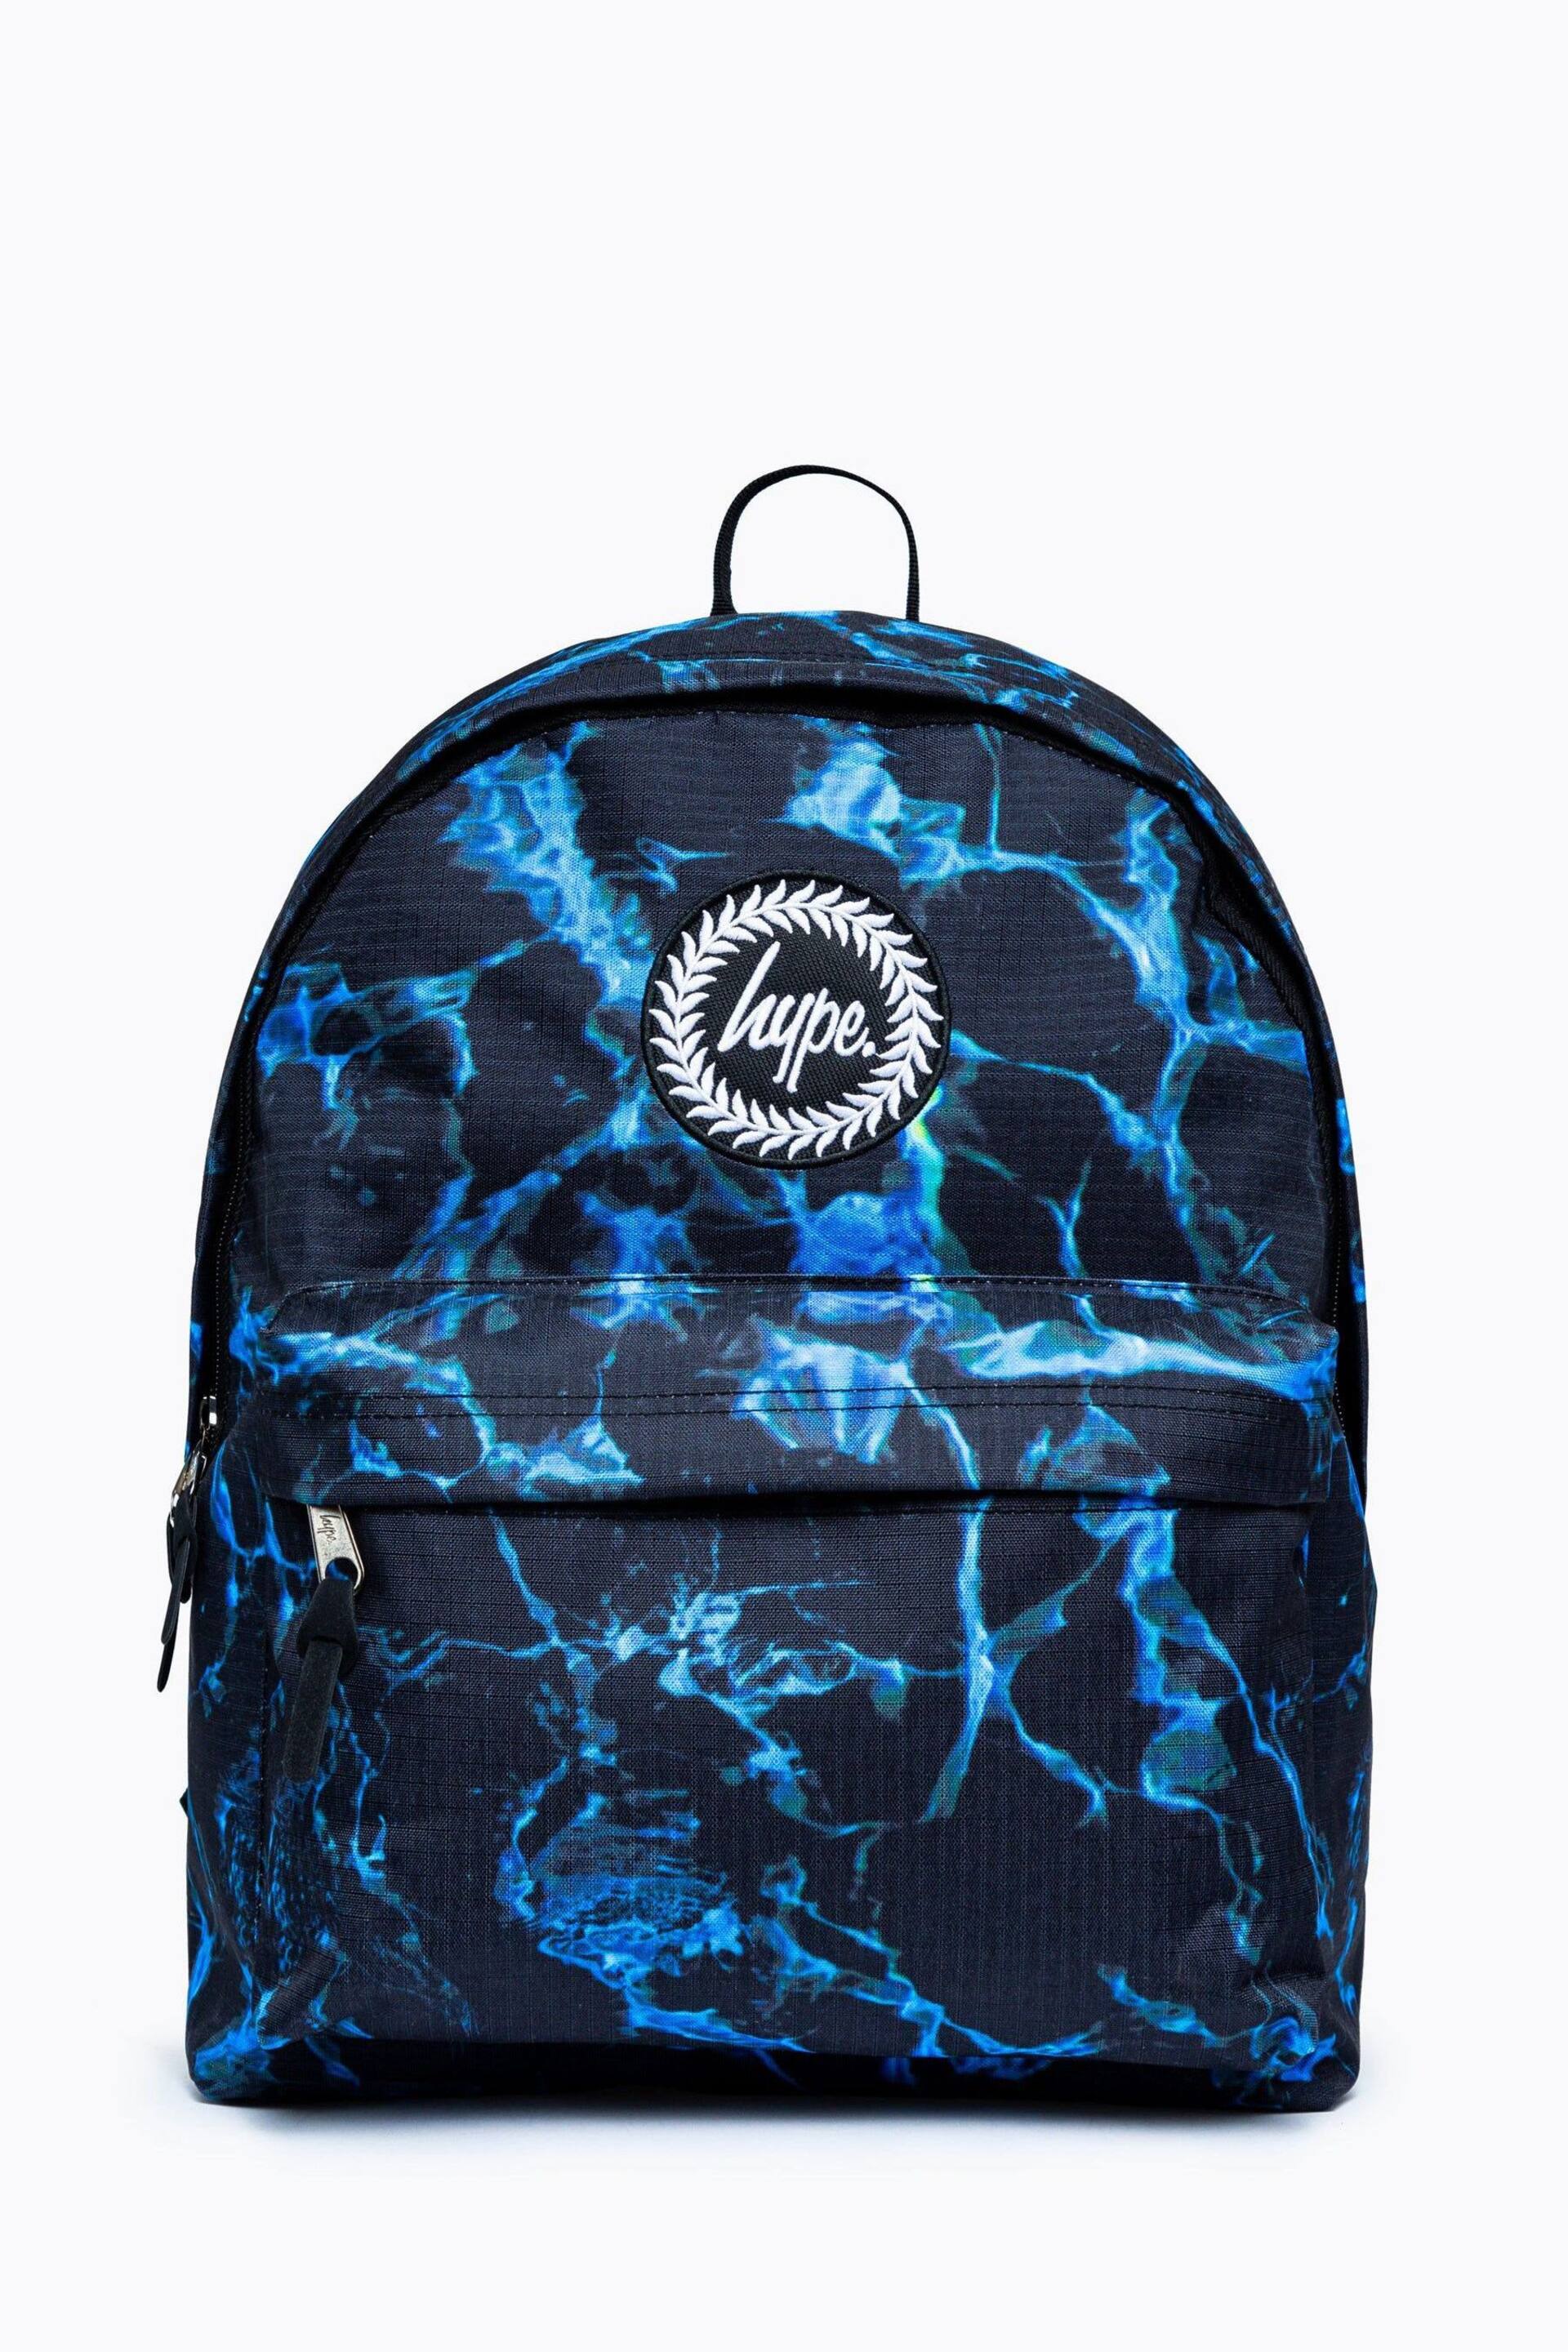 Hype Black XRay Pool Backpack - Image 1 of 8